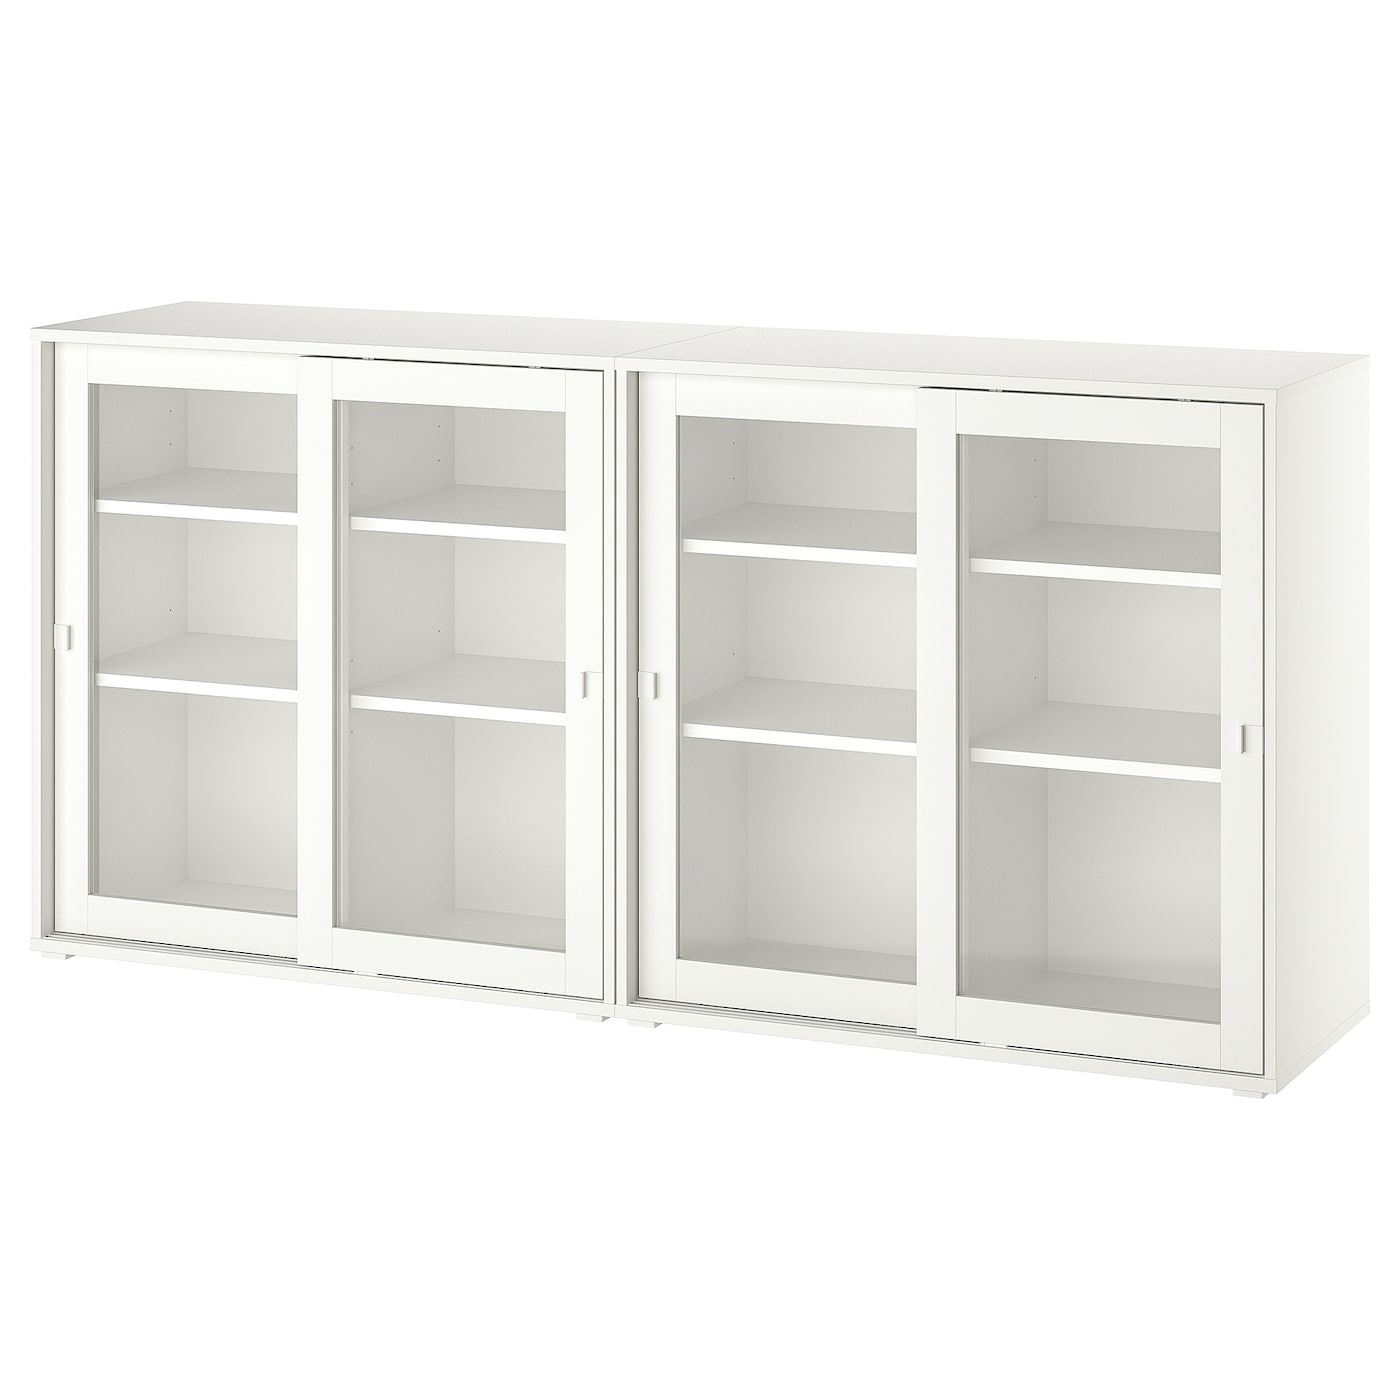 Книжный шкаф - VIHALS IKEA/ ВИХАЛС ИКЕА,   190х90 см, белый